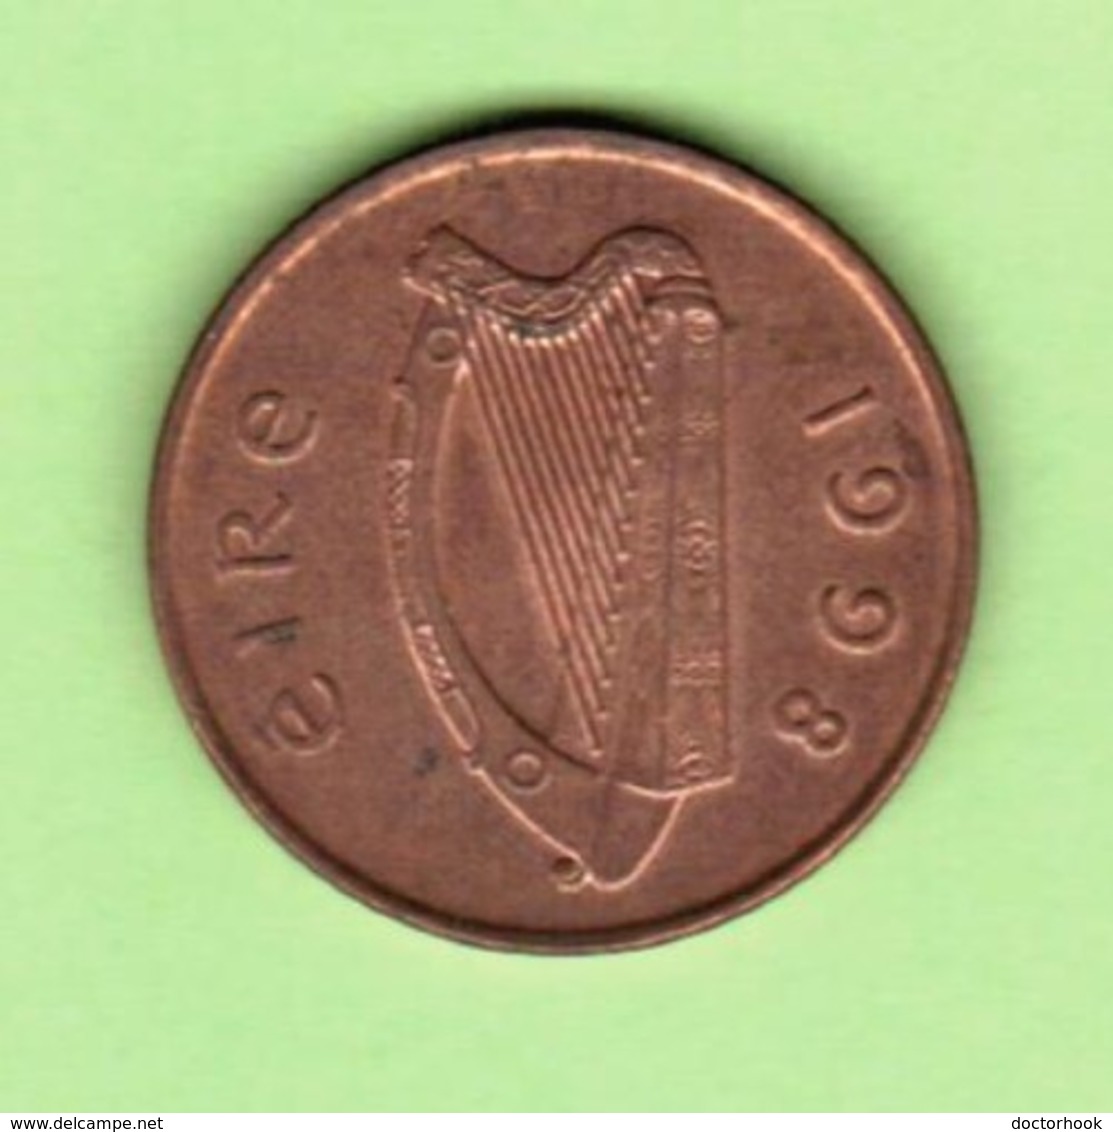 IRELAND   2 PENCE 1998  (KM # 21) #5213 - Irland